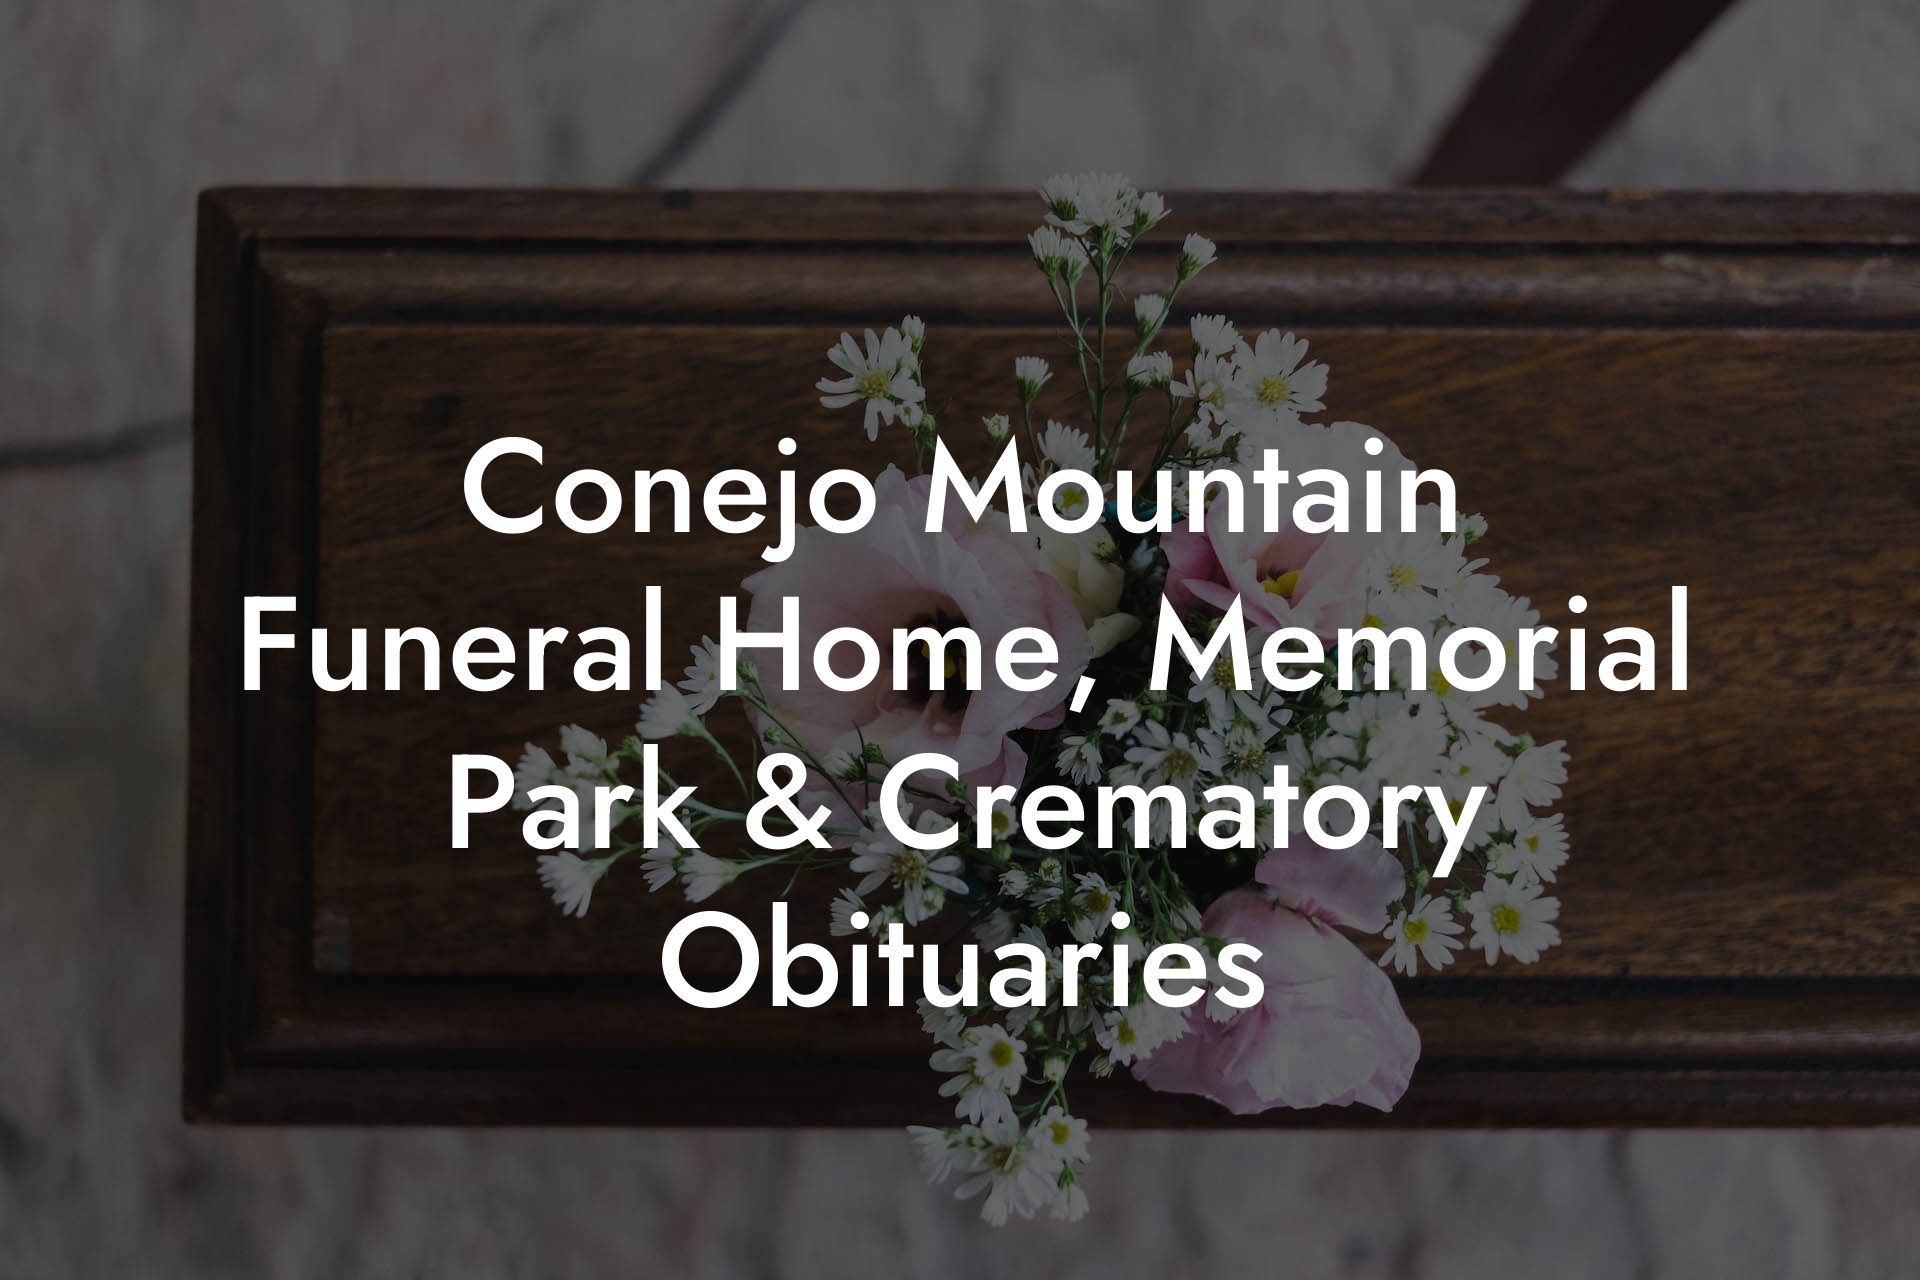 Conejo Mountain Funeral Home, Memorial Park & Crematory Obituaries